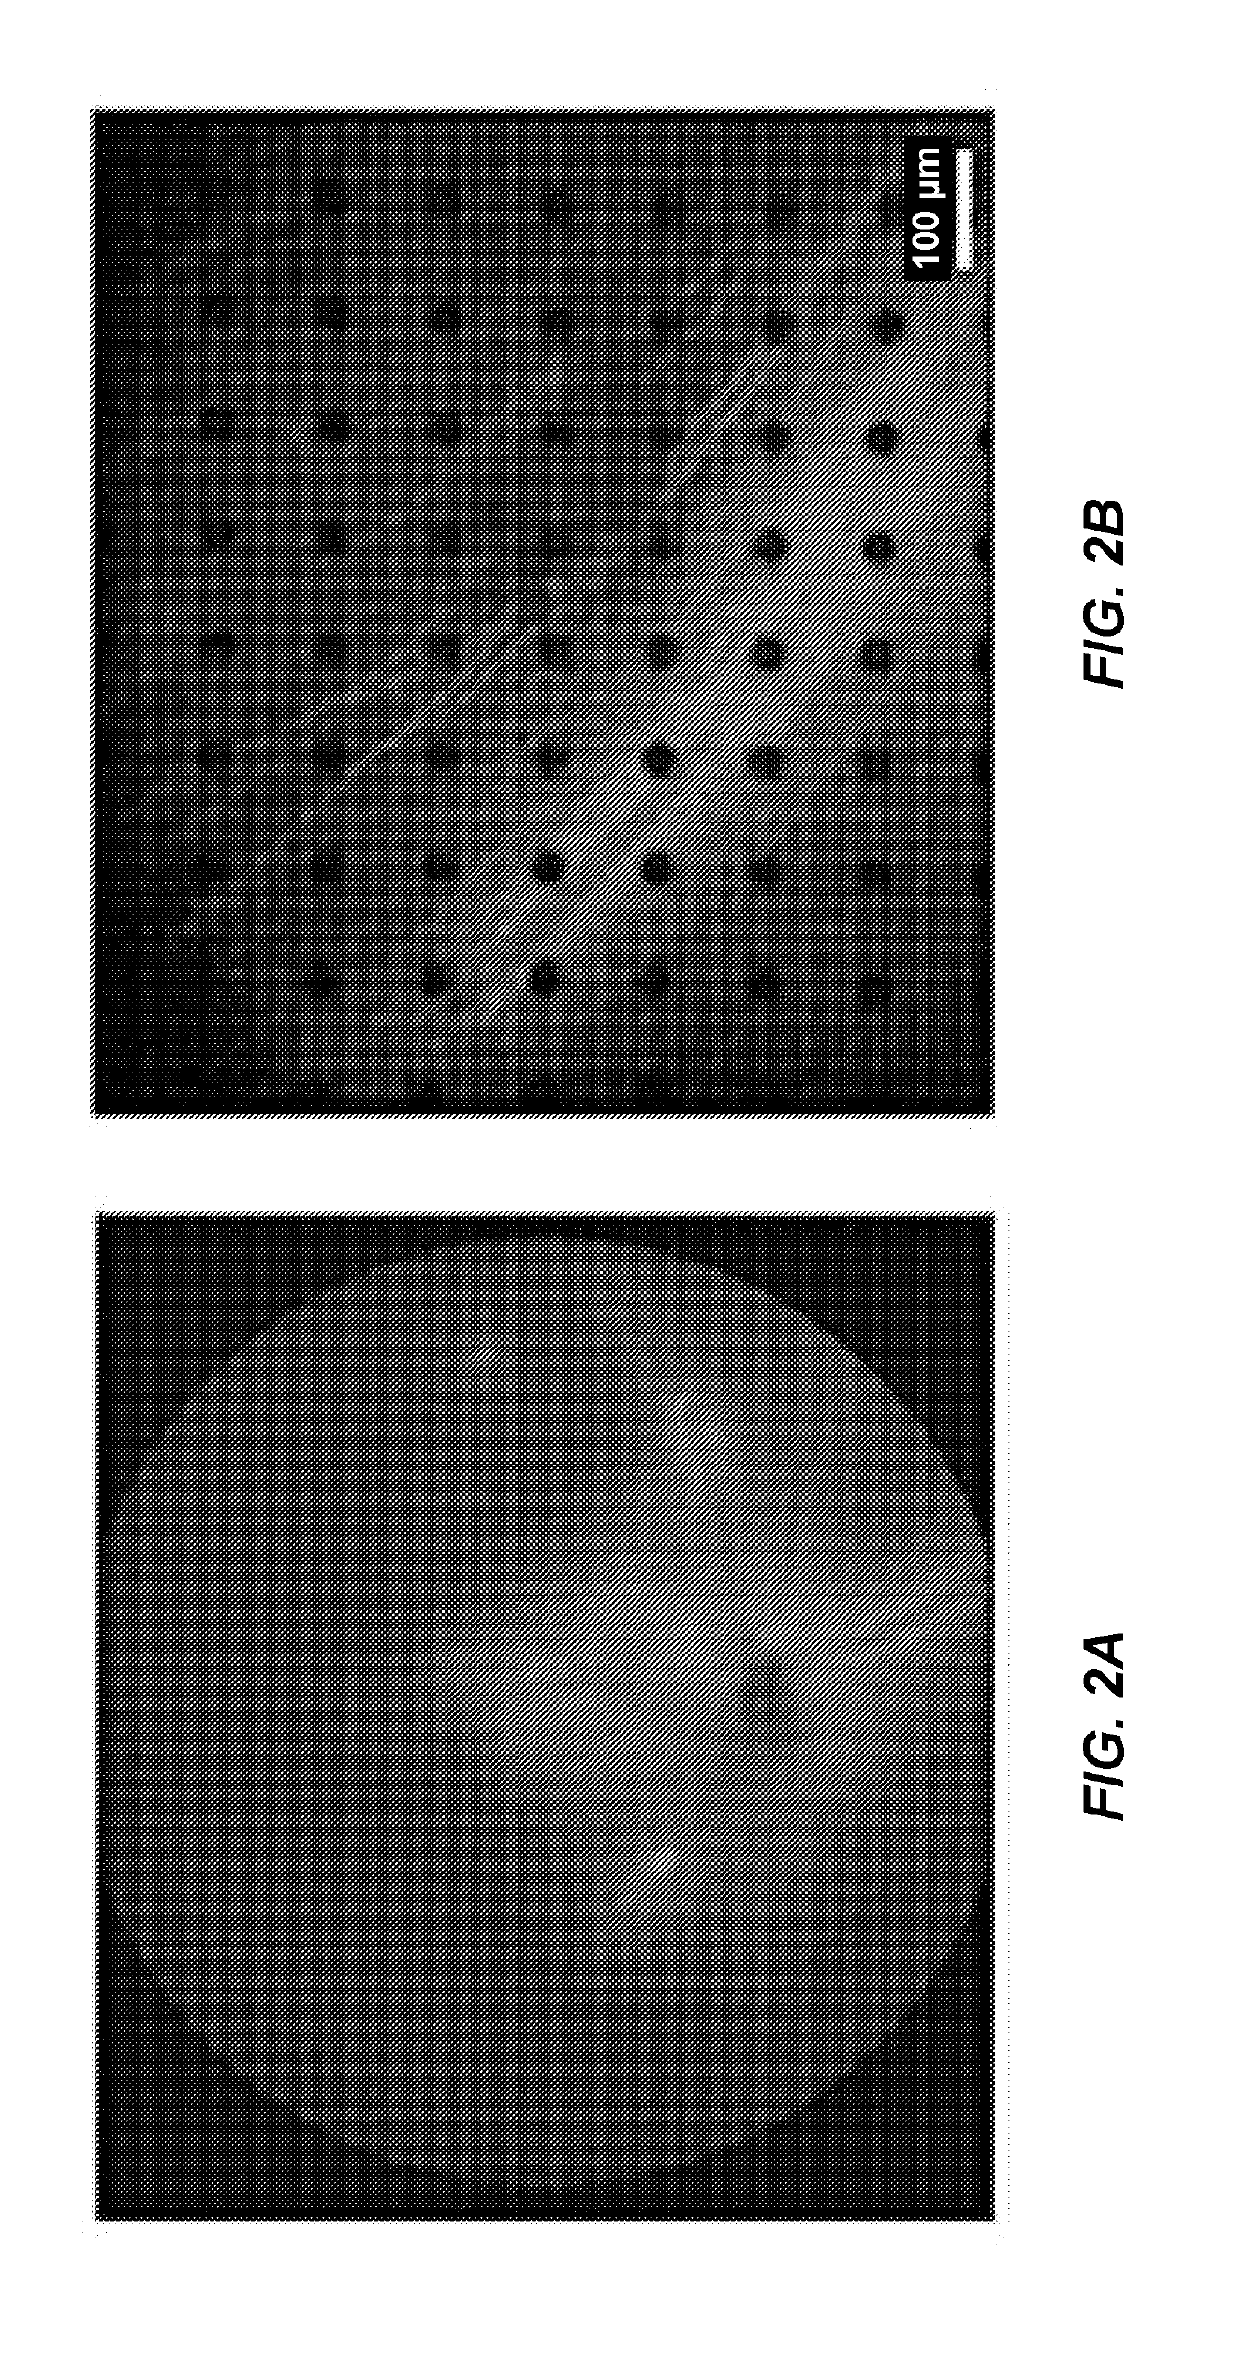 Optogenetic visual restoration using chrimson